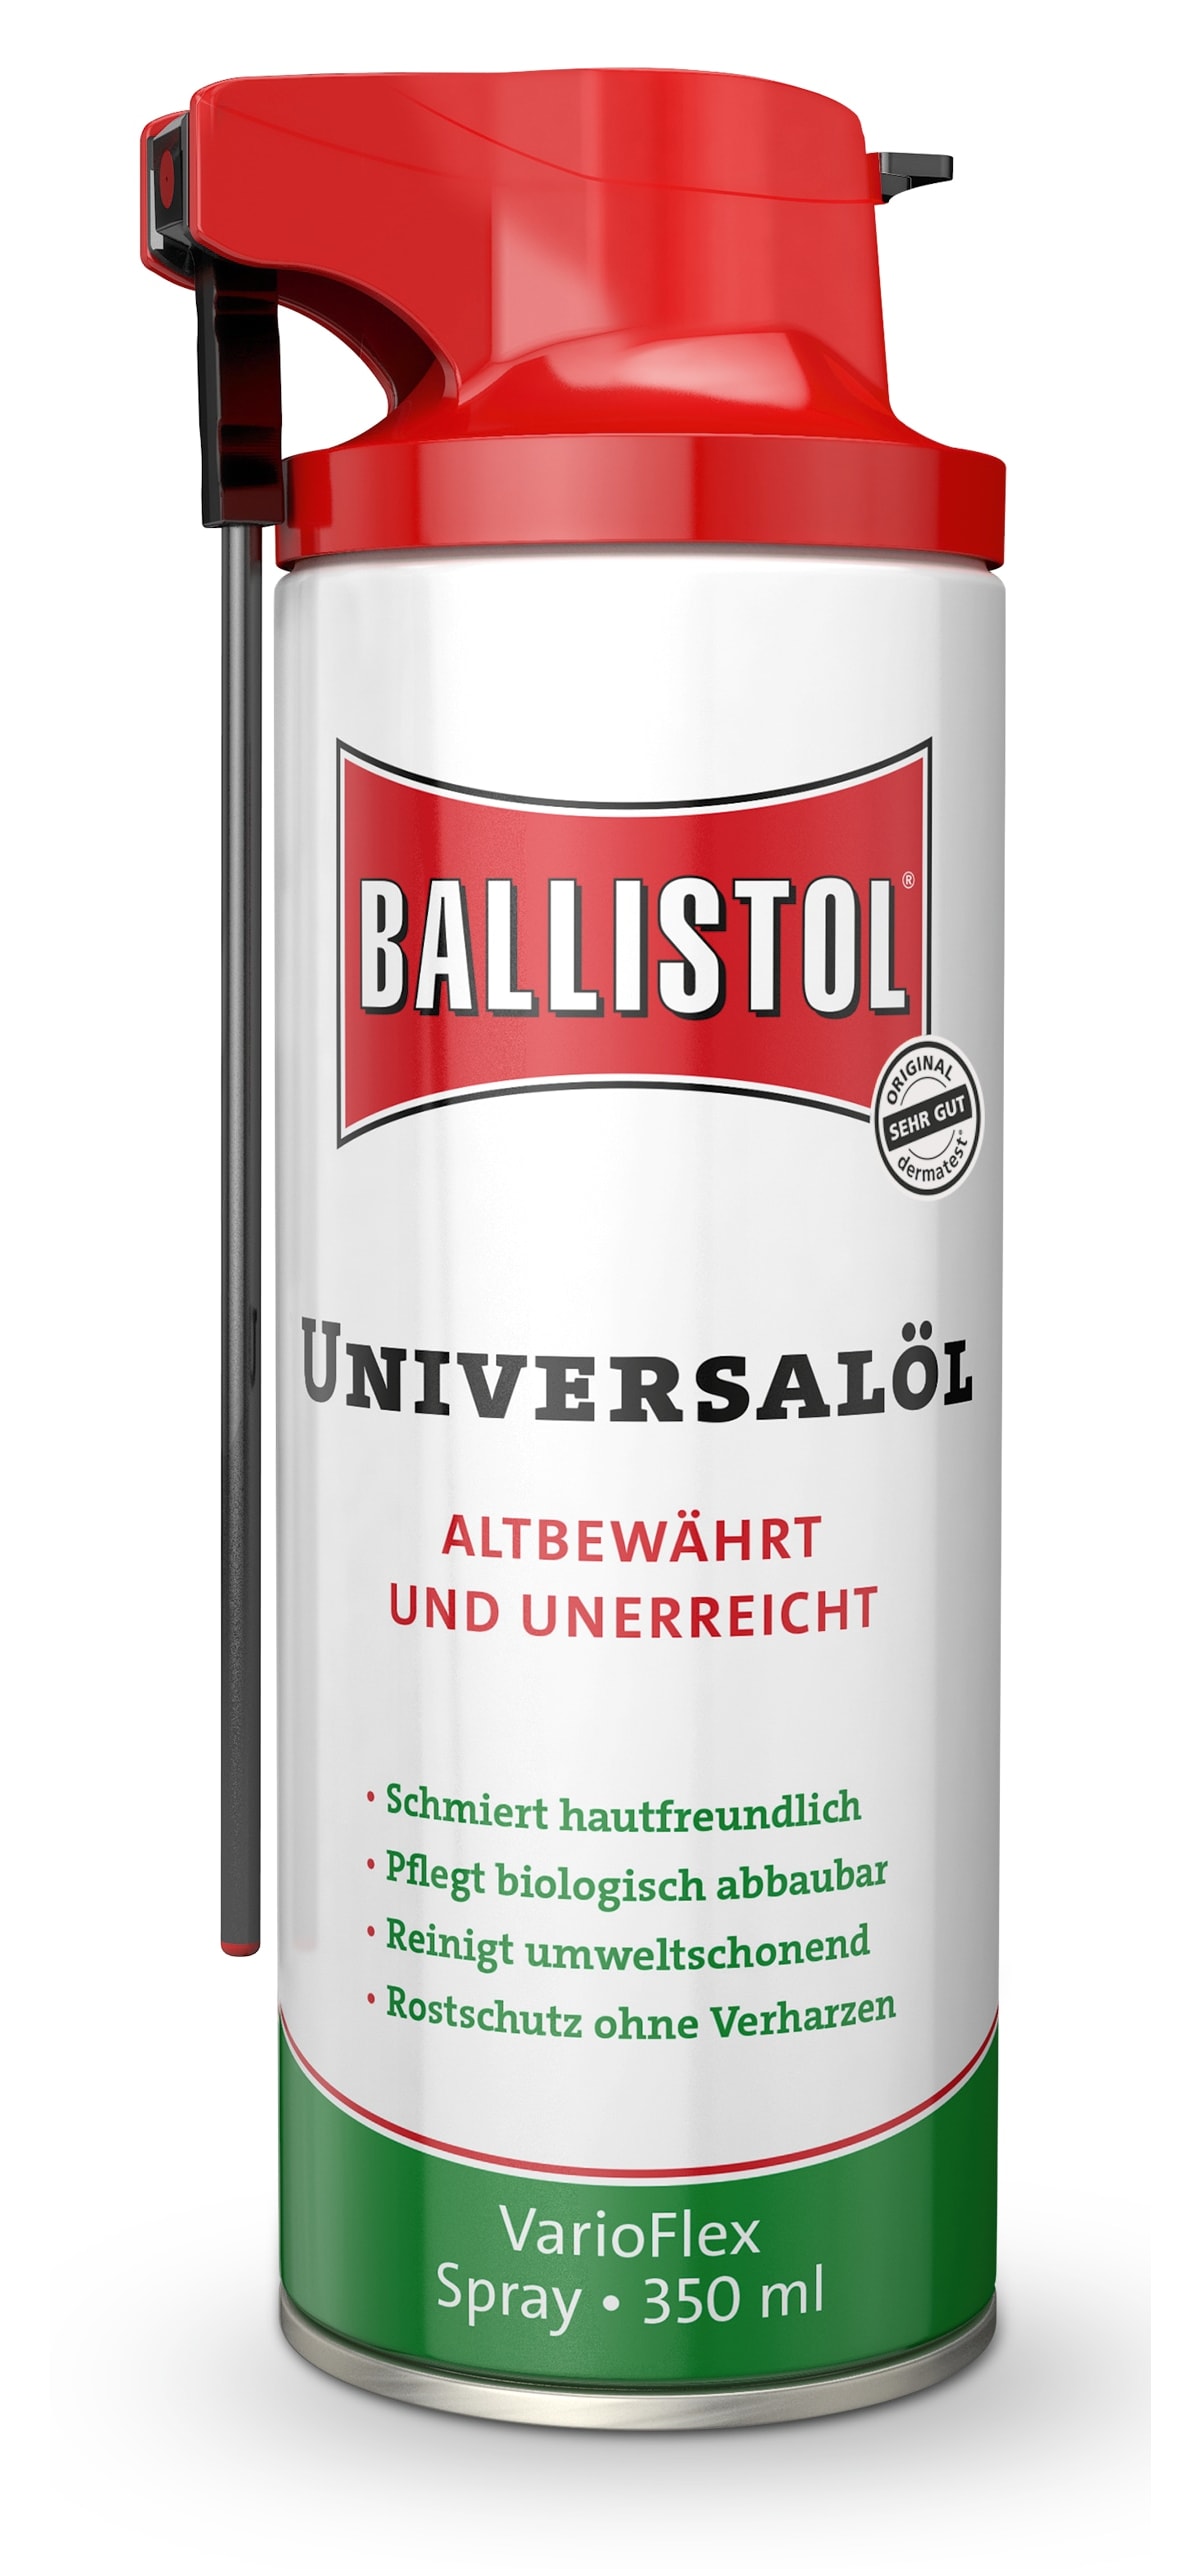 BALLISTOL Universalöl VarioFlex Spray, 350 ml